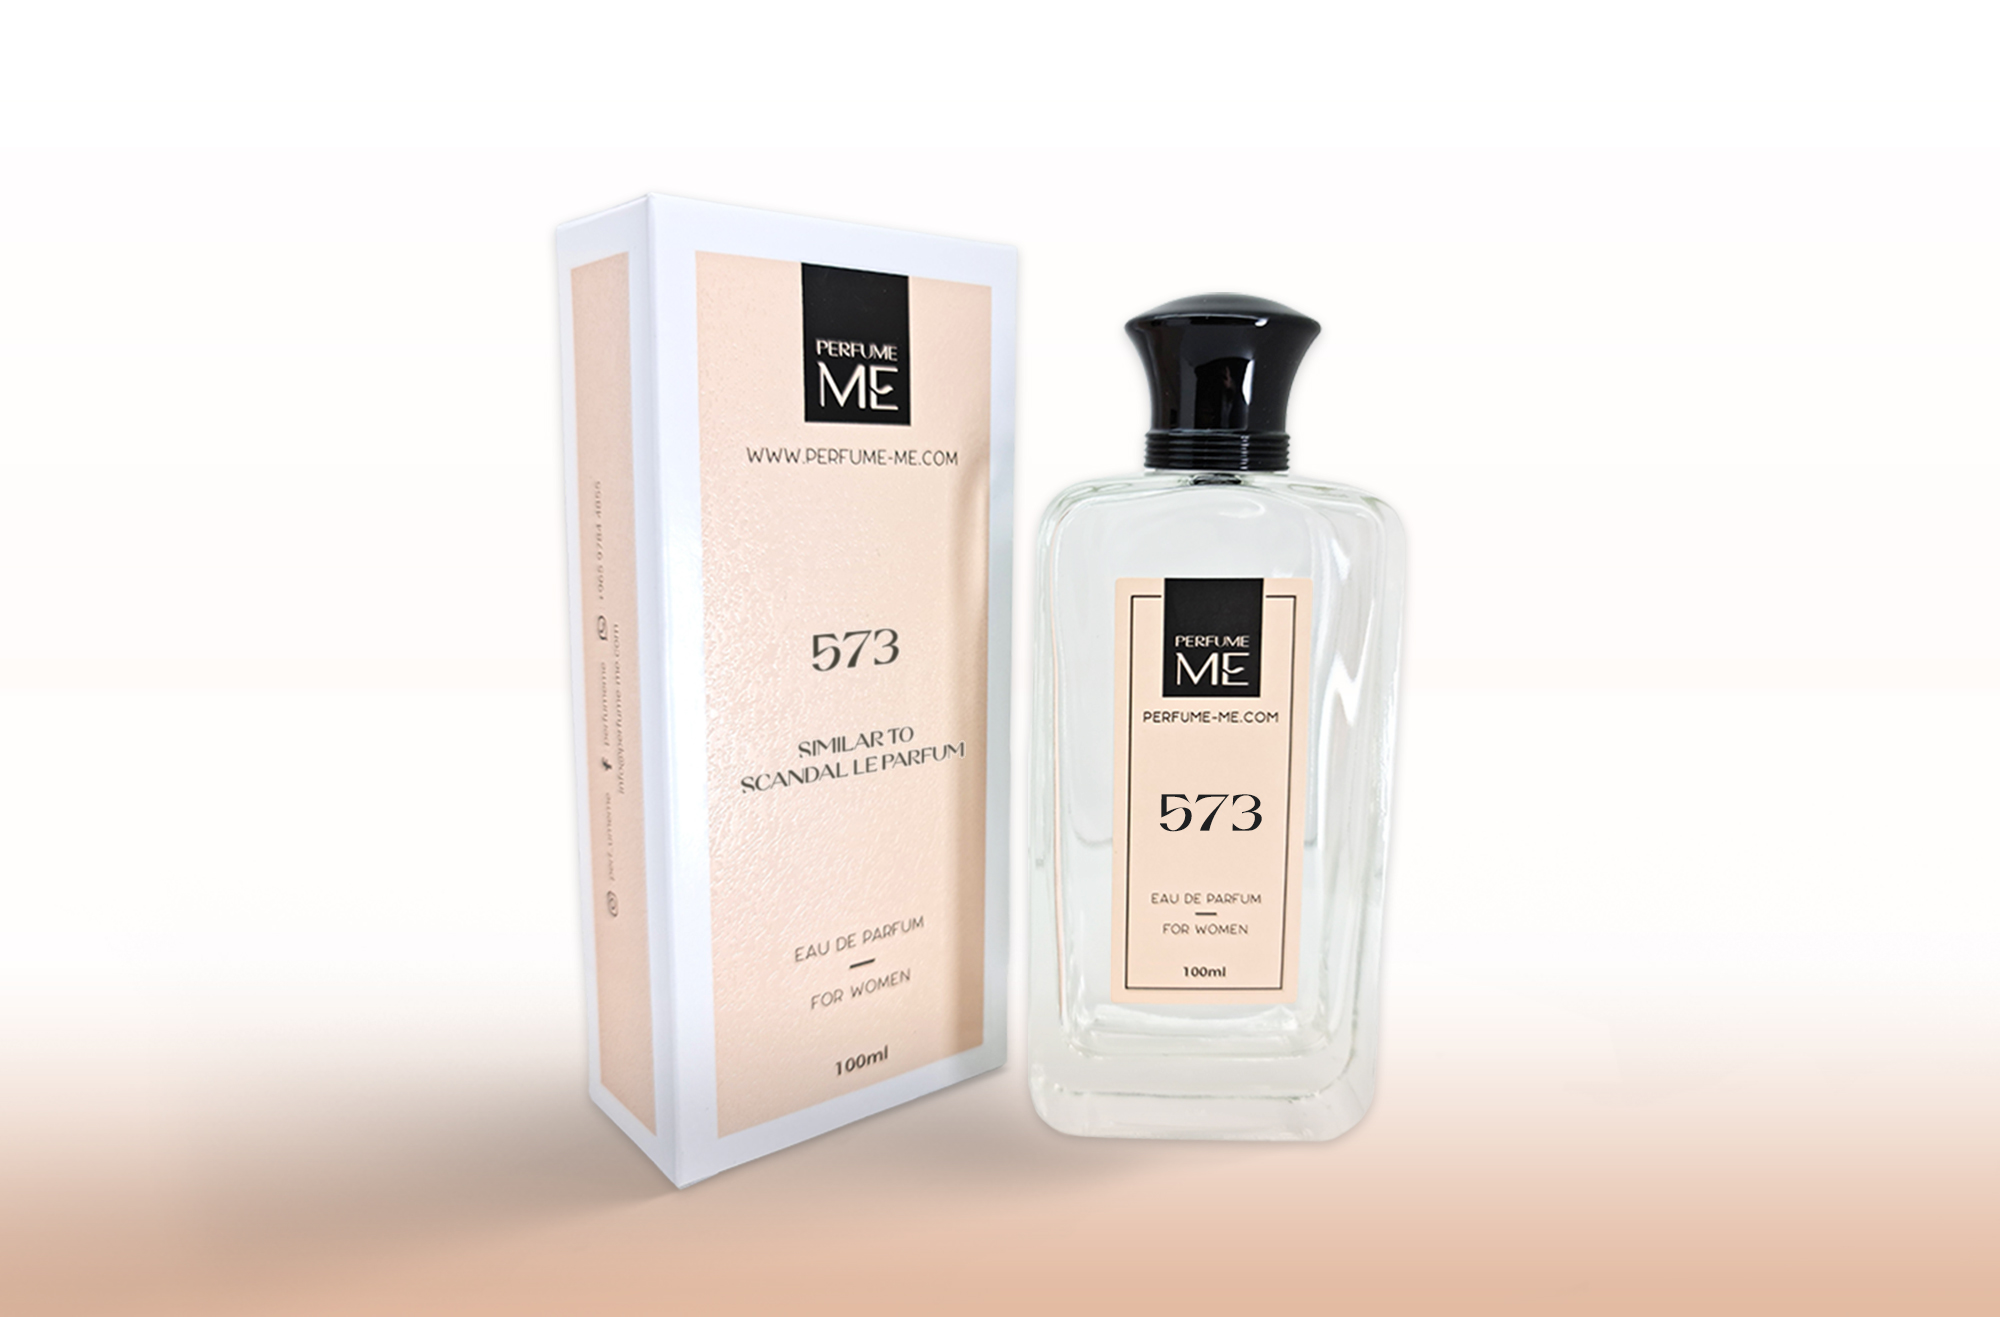 Le Jean Gaultier ME Perfume Similar Parfum Paul – PERFUME by 573: to ME – Scandal عطرني